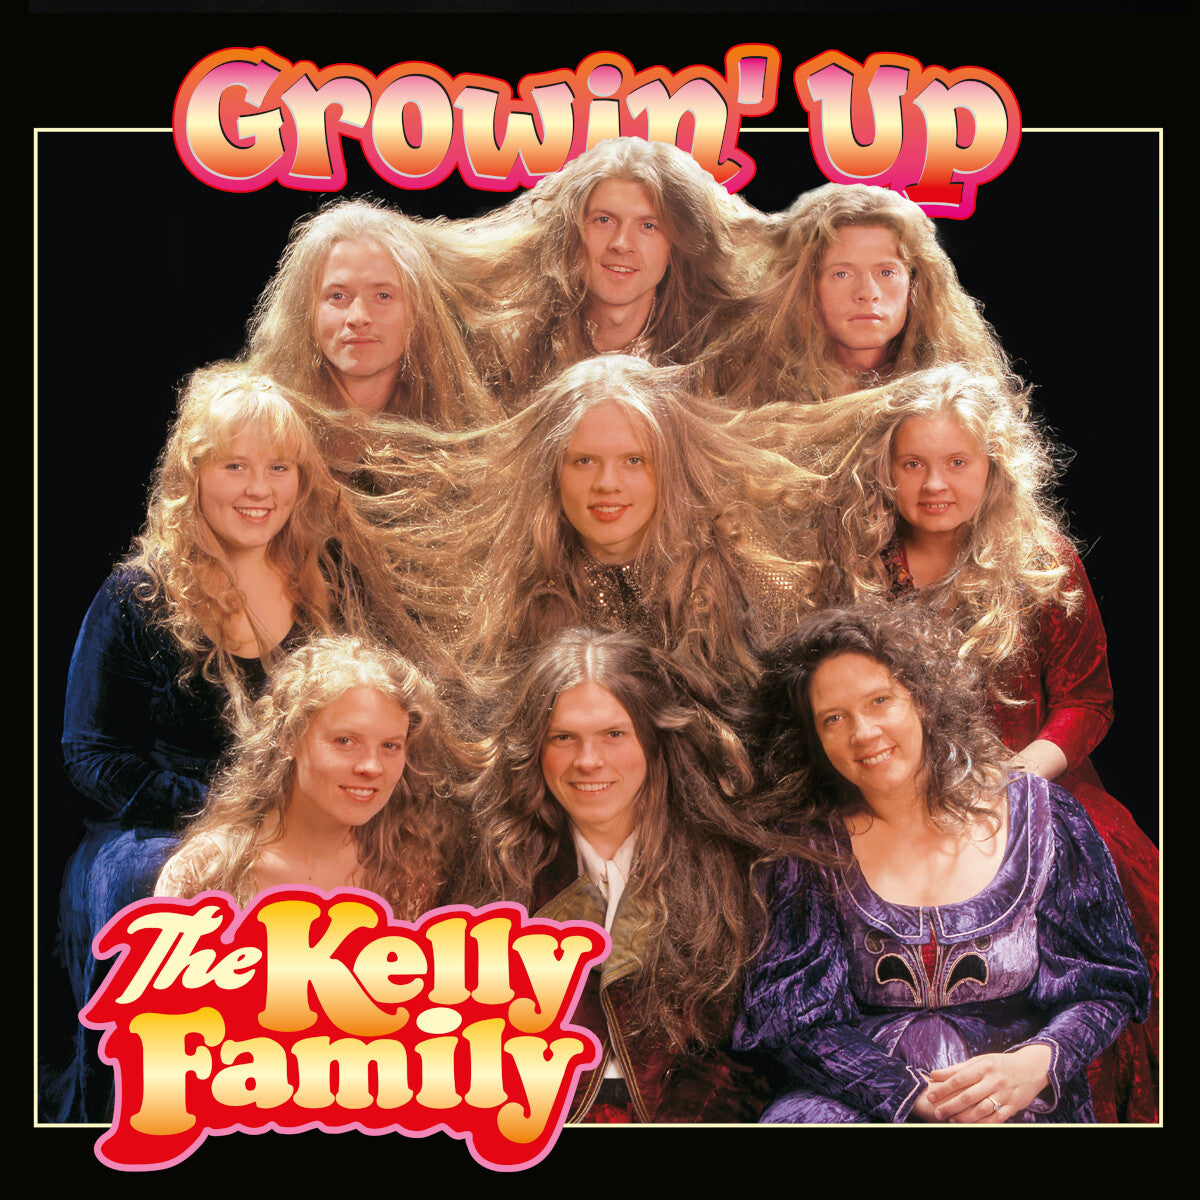 https://images.bravado.de/prod/product-assets/product-asset-data/kelly-family-the/kelly-family/products/502670/web/379630/image-thumb__379630__3000x3000_original/The-Kelly-Family-Growin-Up-Vinyl-Album-502670-379630.34b3f4a8.jpg